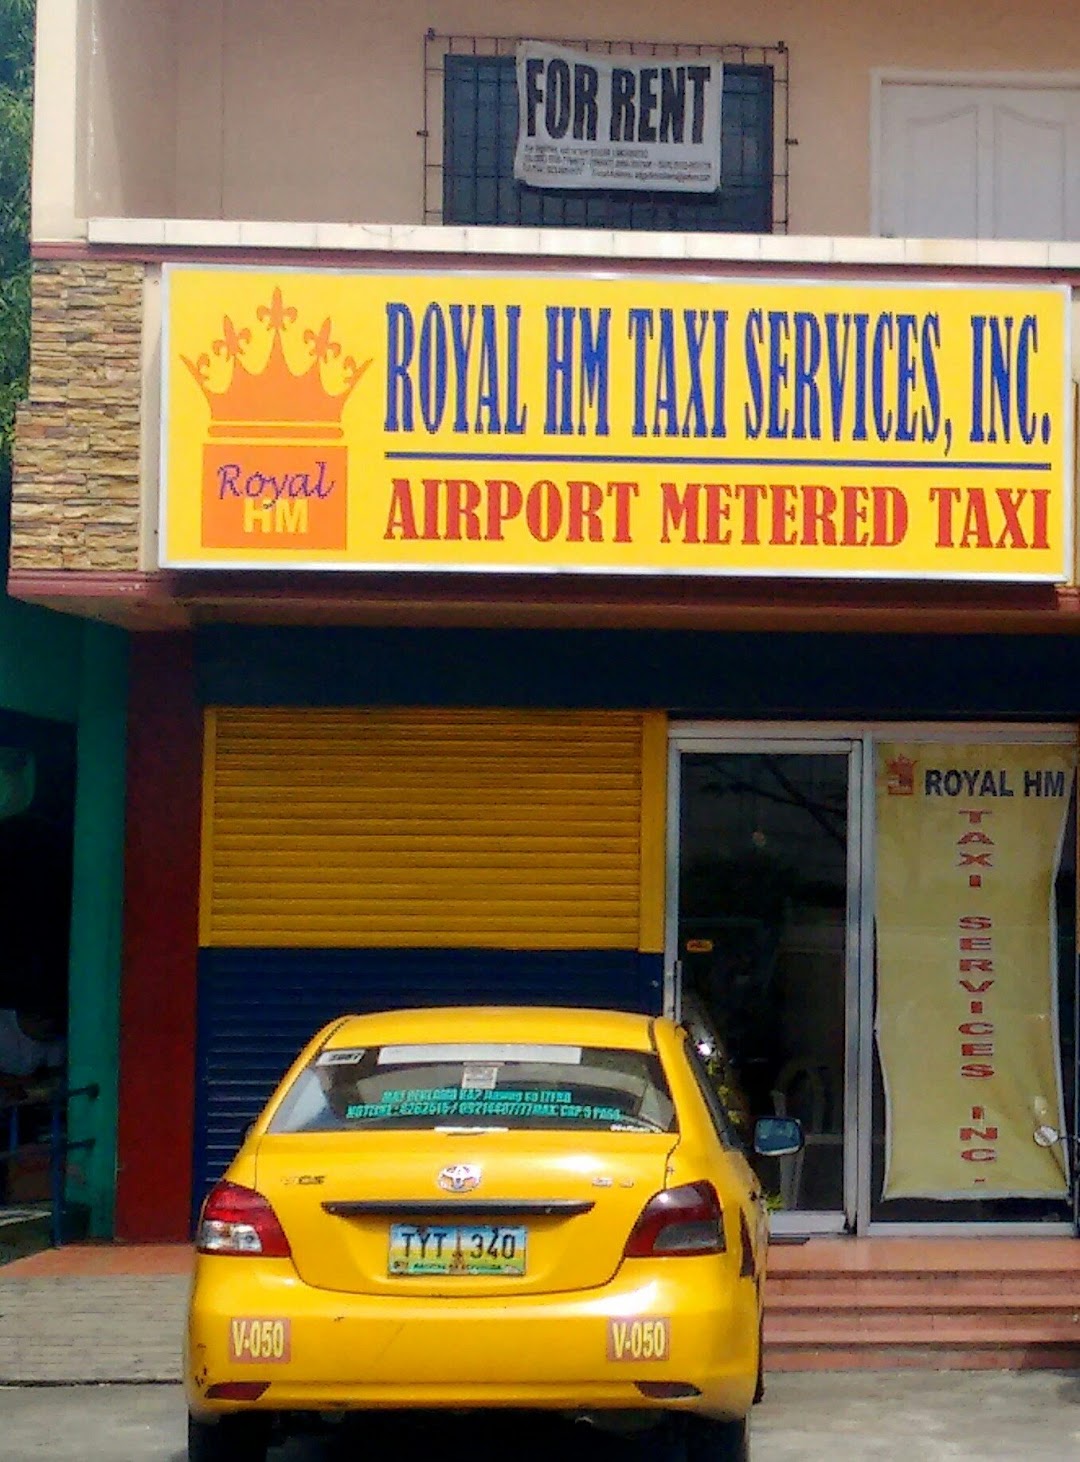 Royal HM Taxi Services, Inc.